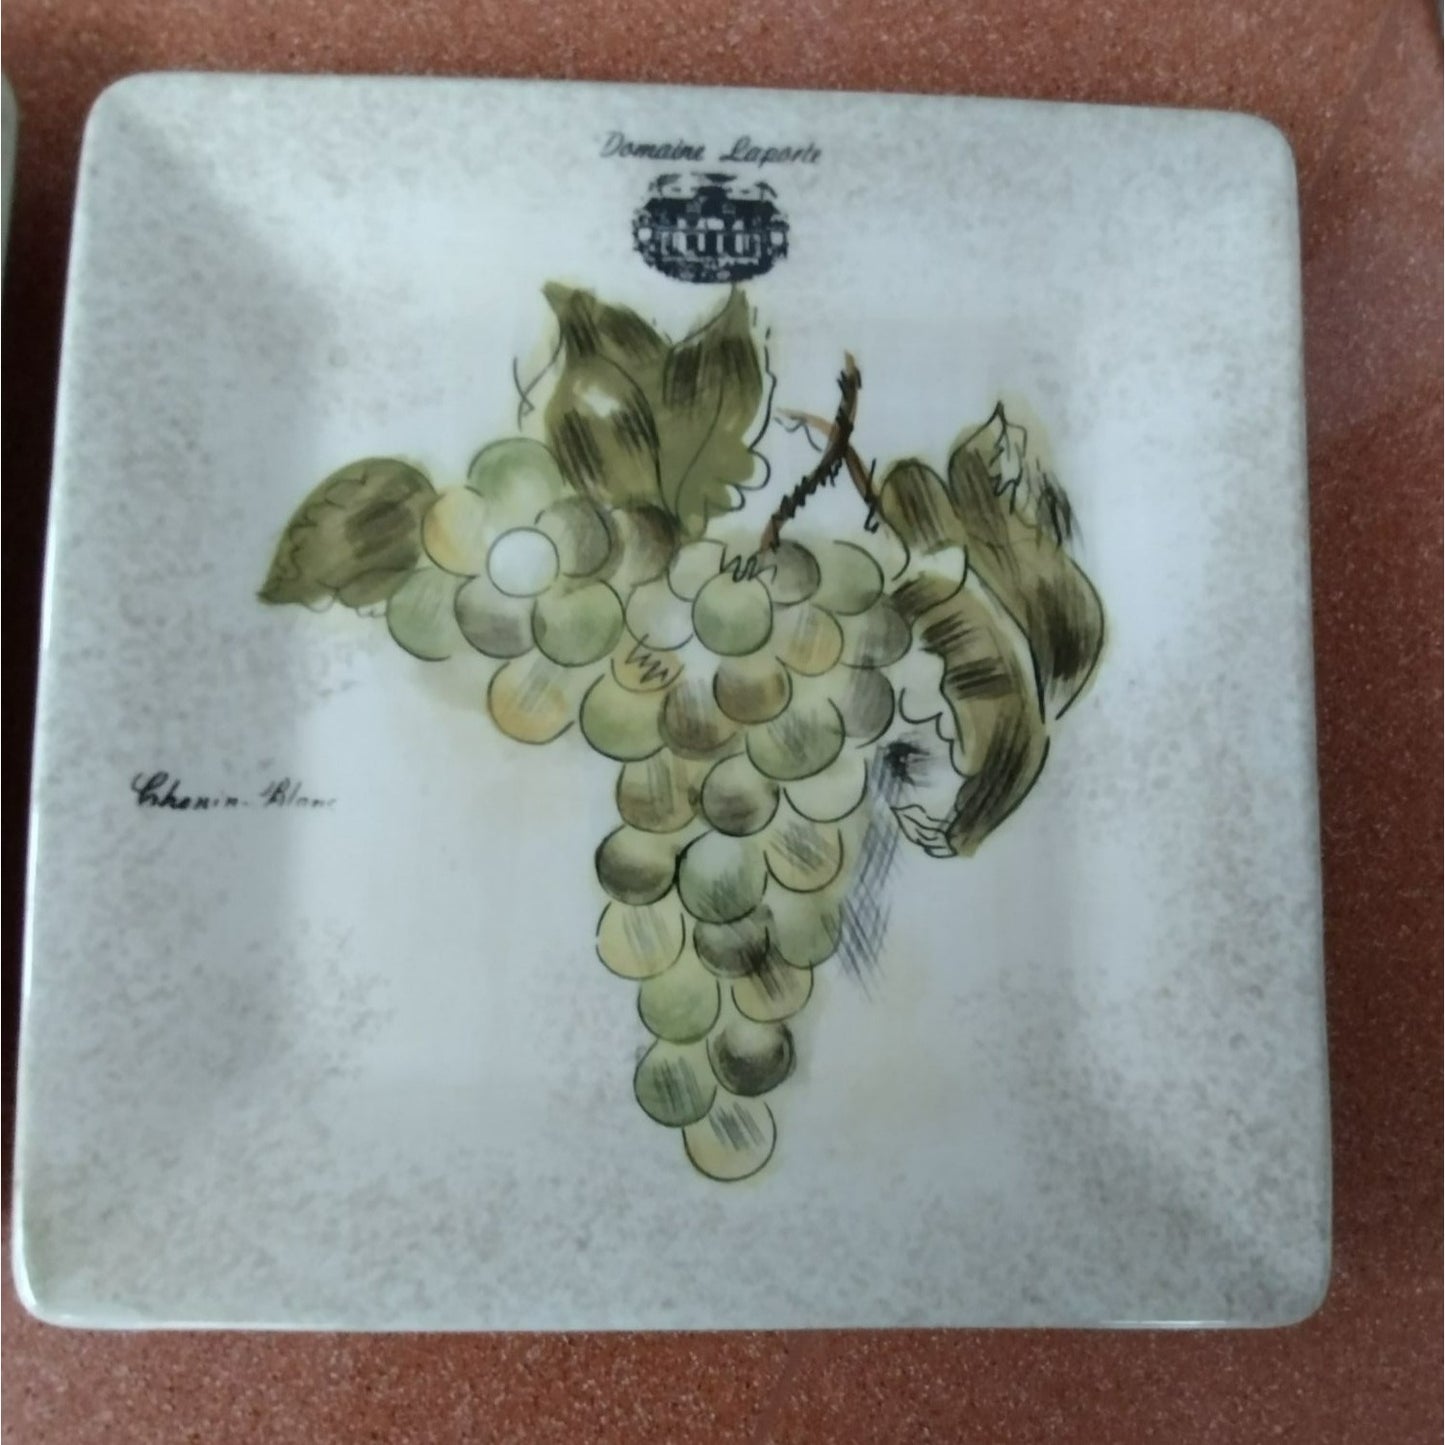 222 Fifth Vinter's Journal Salad Plates, Set of 2, 8" Square Ceramic Wine Grapes